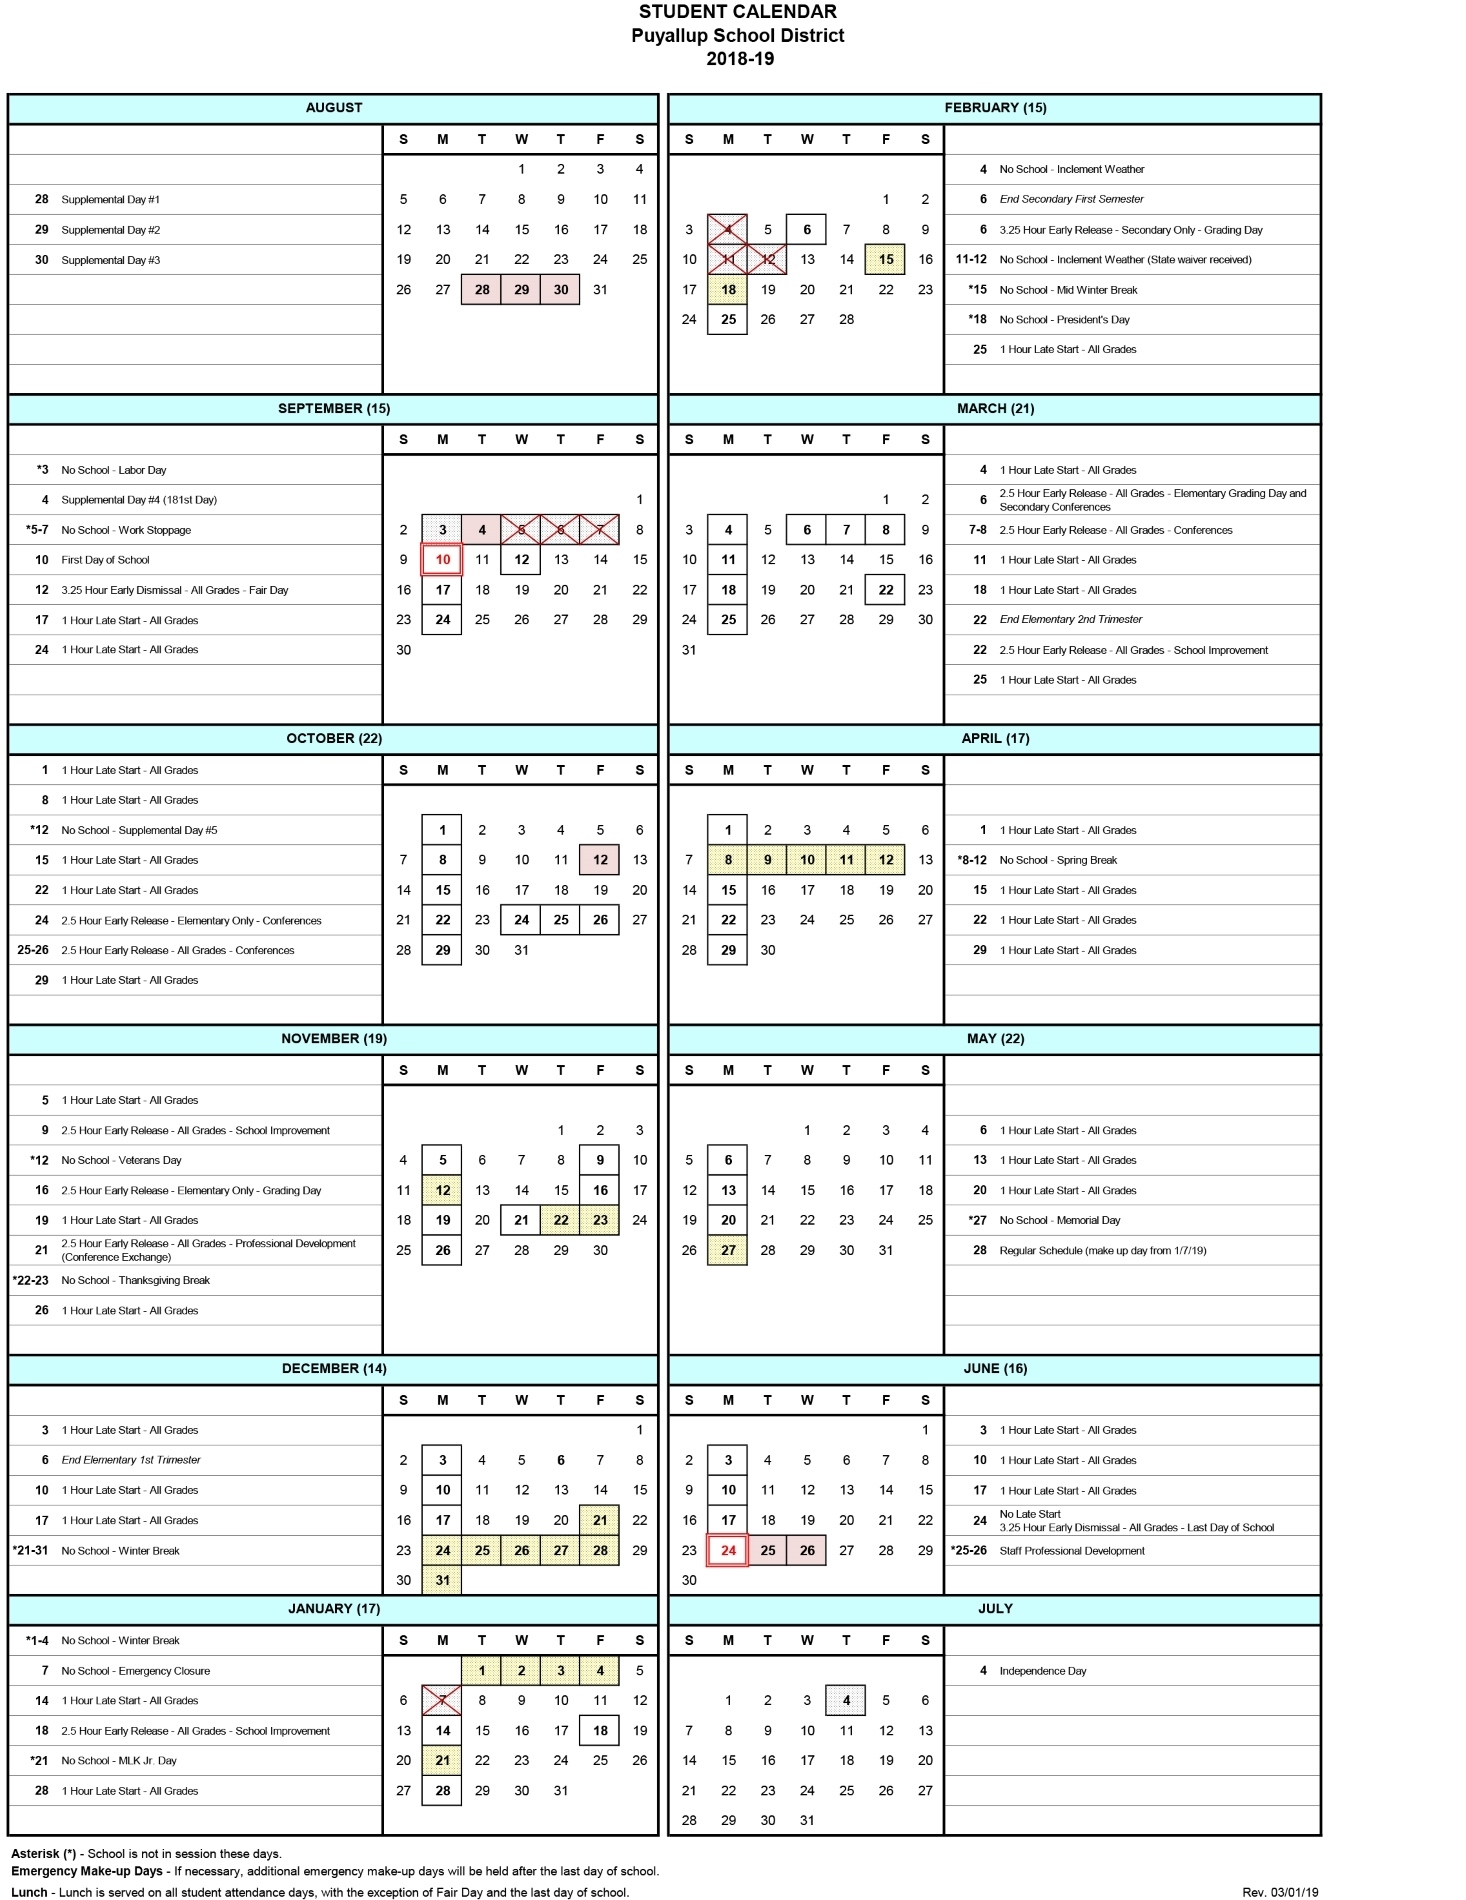 2018-19 Student Calendar Revision - Puyallup School District Region 1 School Calendar